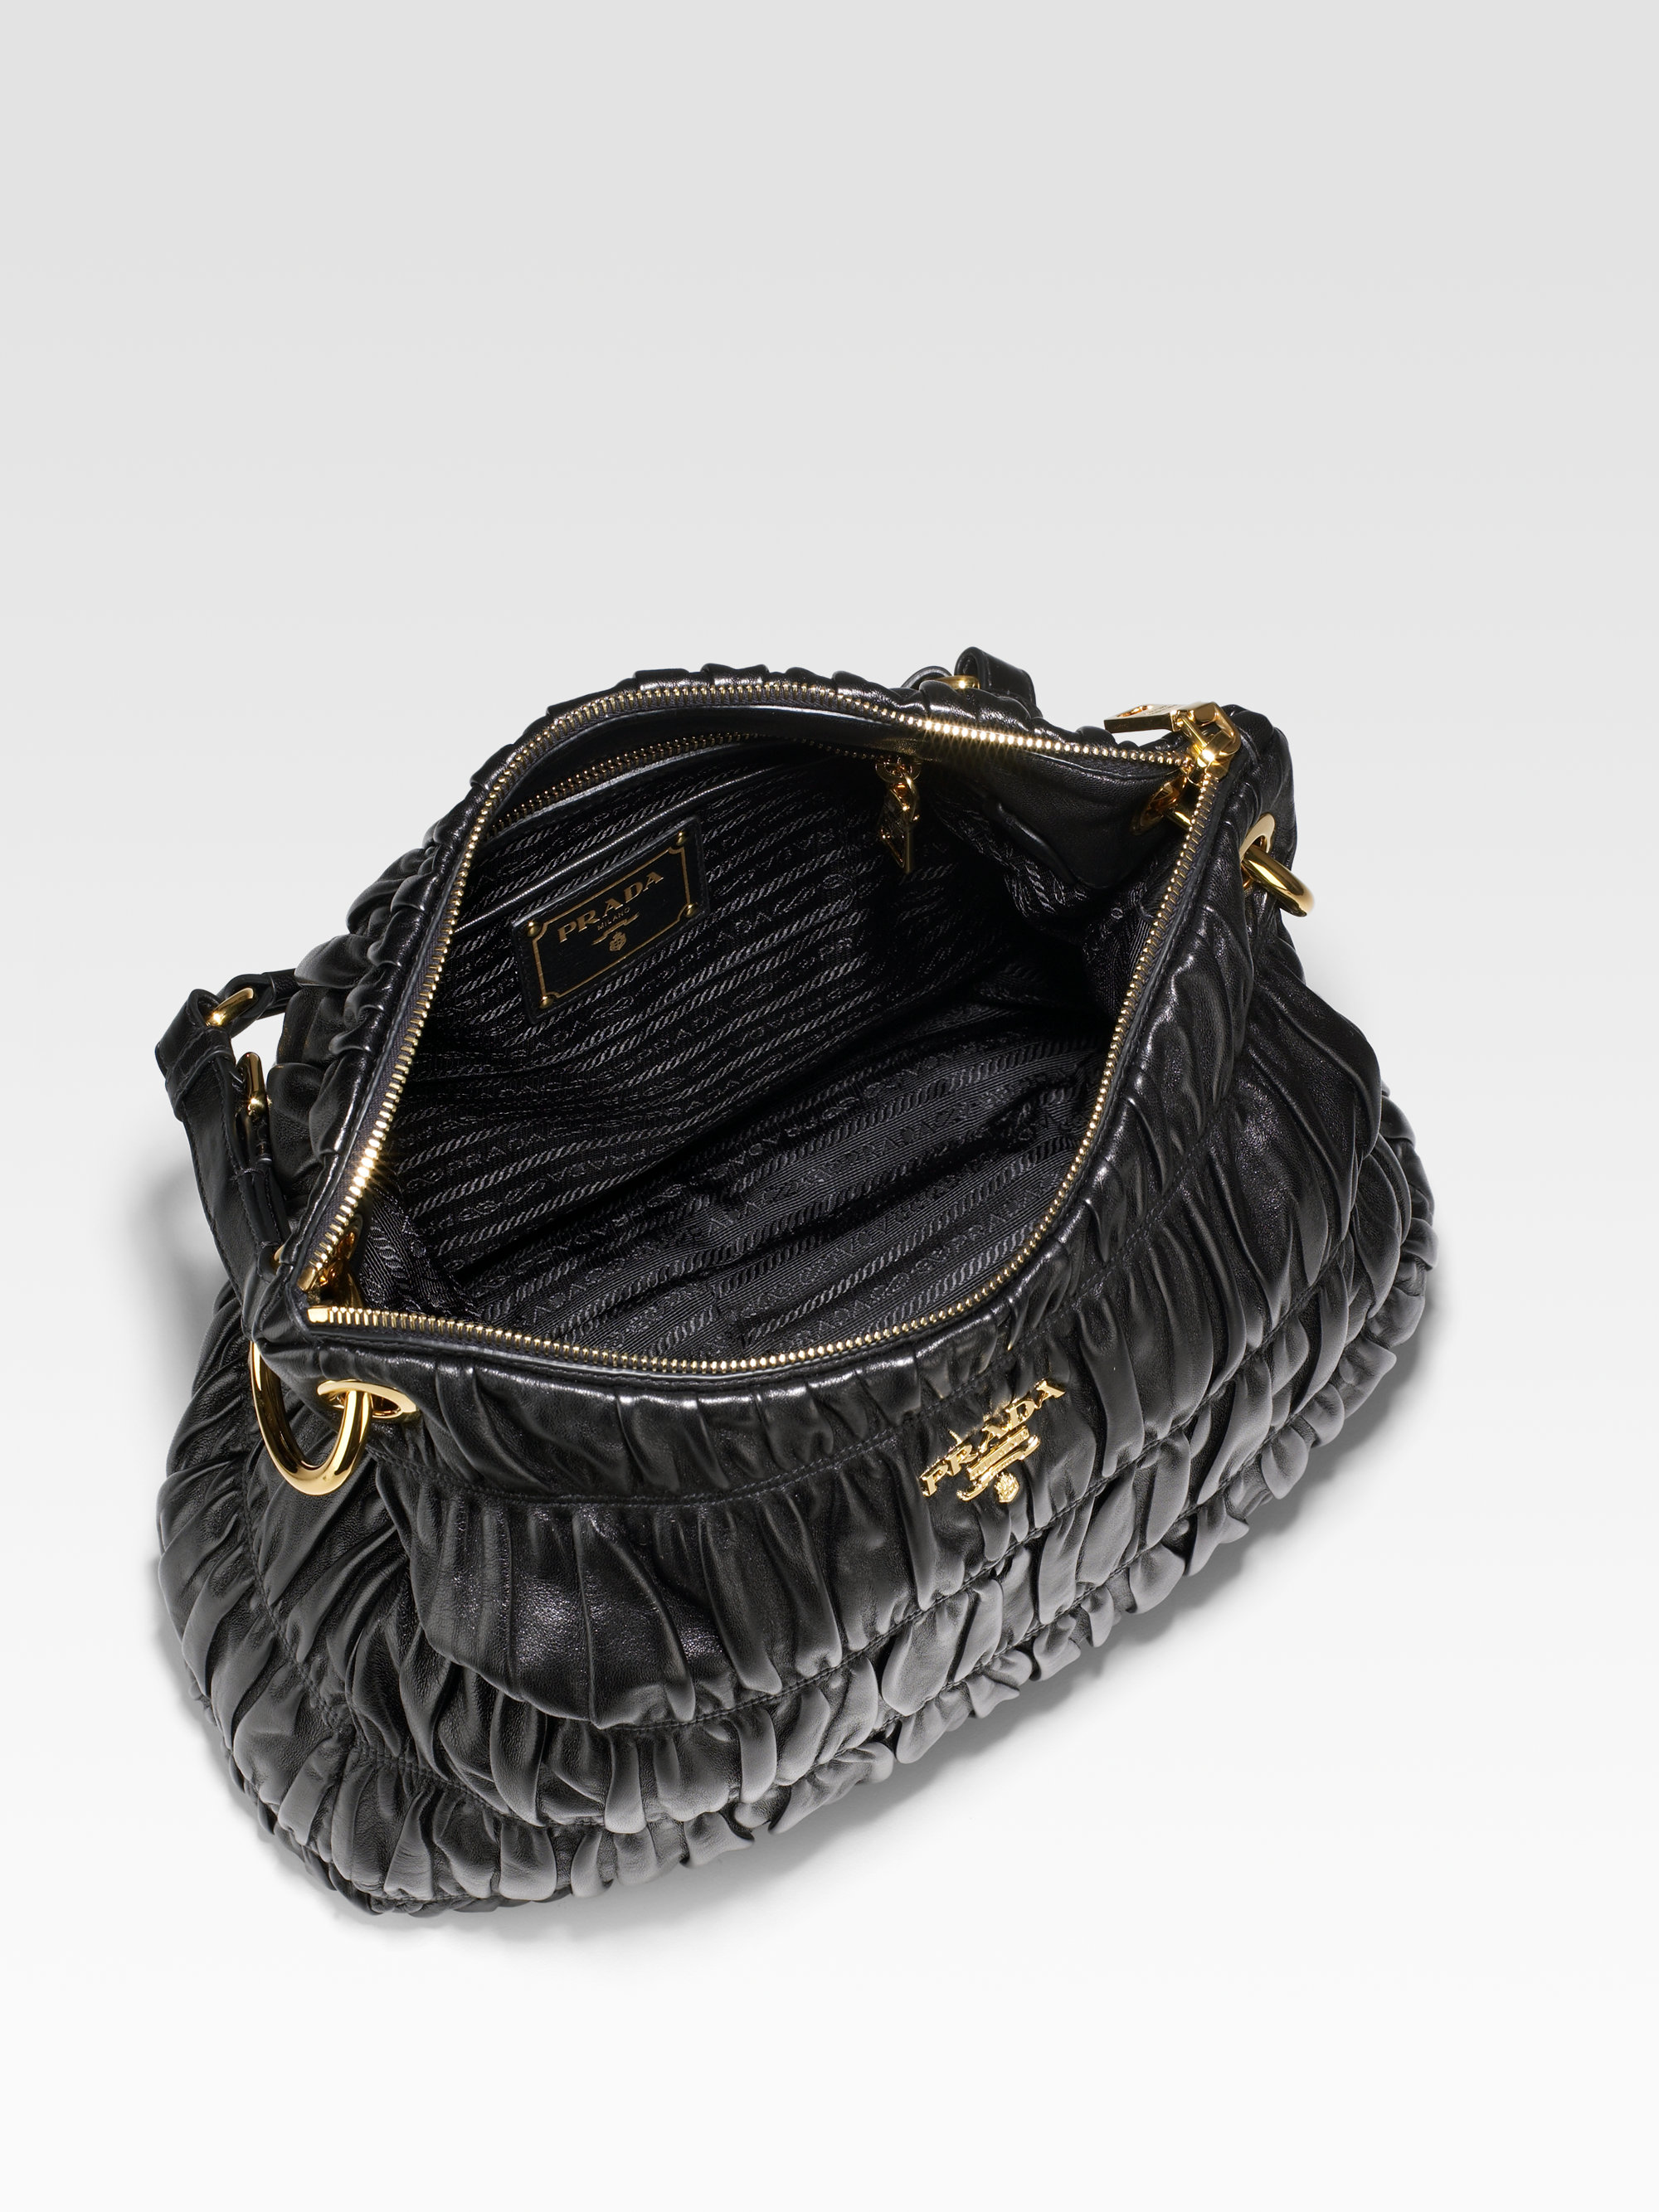 Prada Nappa Gaufre Top Zip Hobo Bag in Black | Lyst  